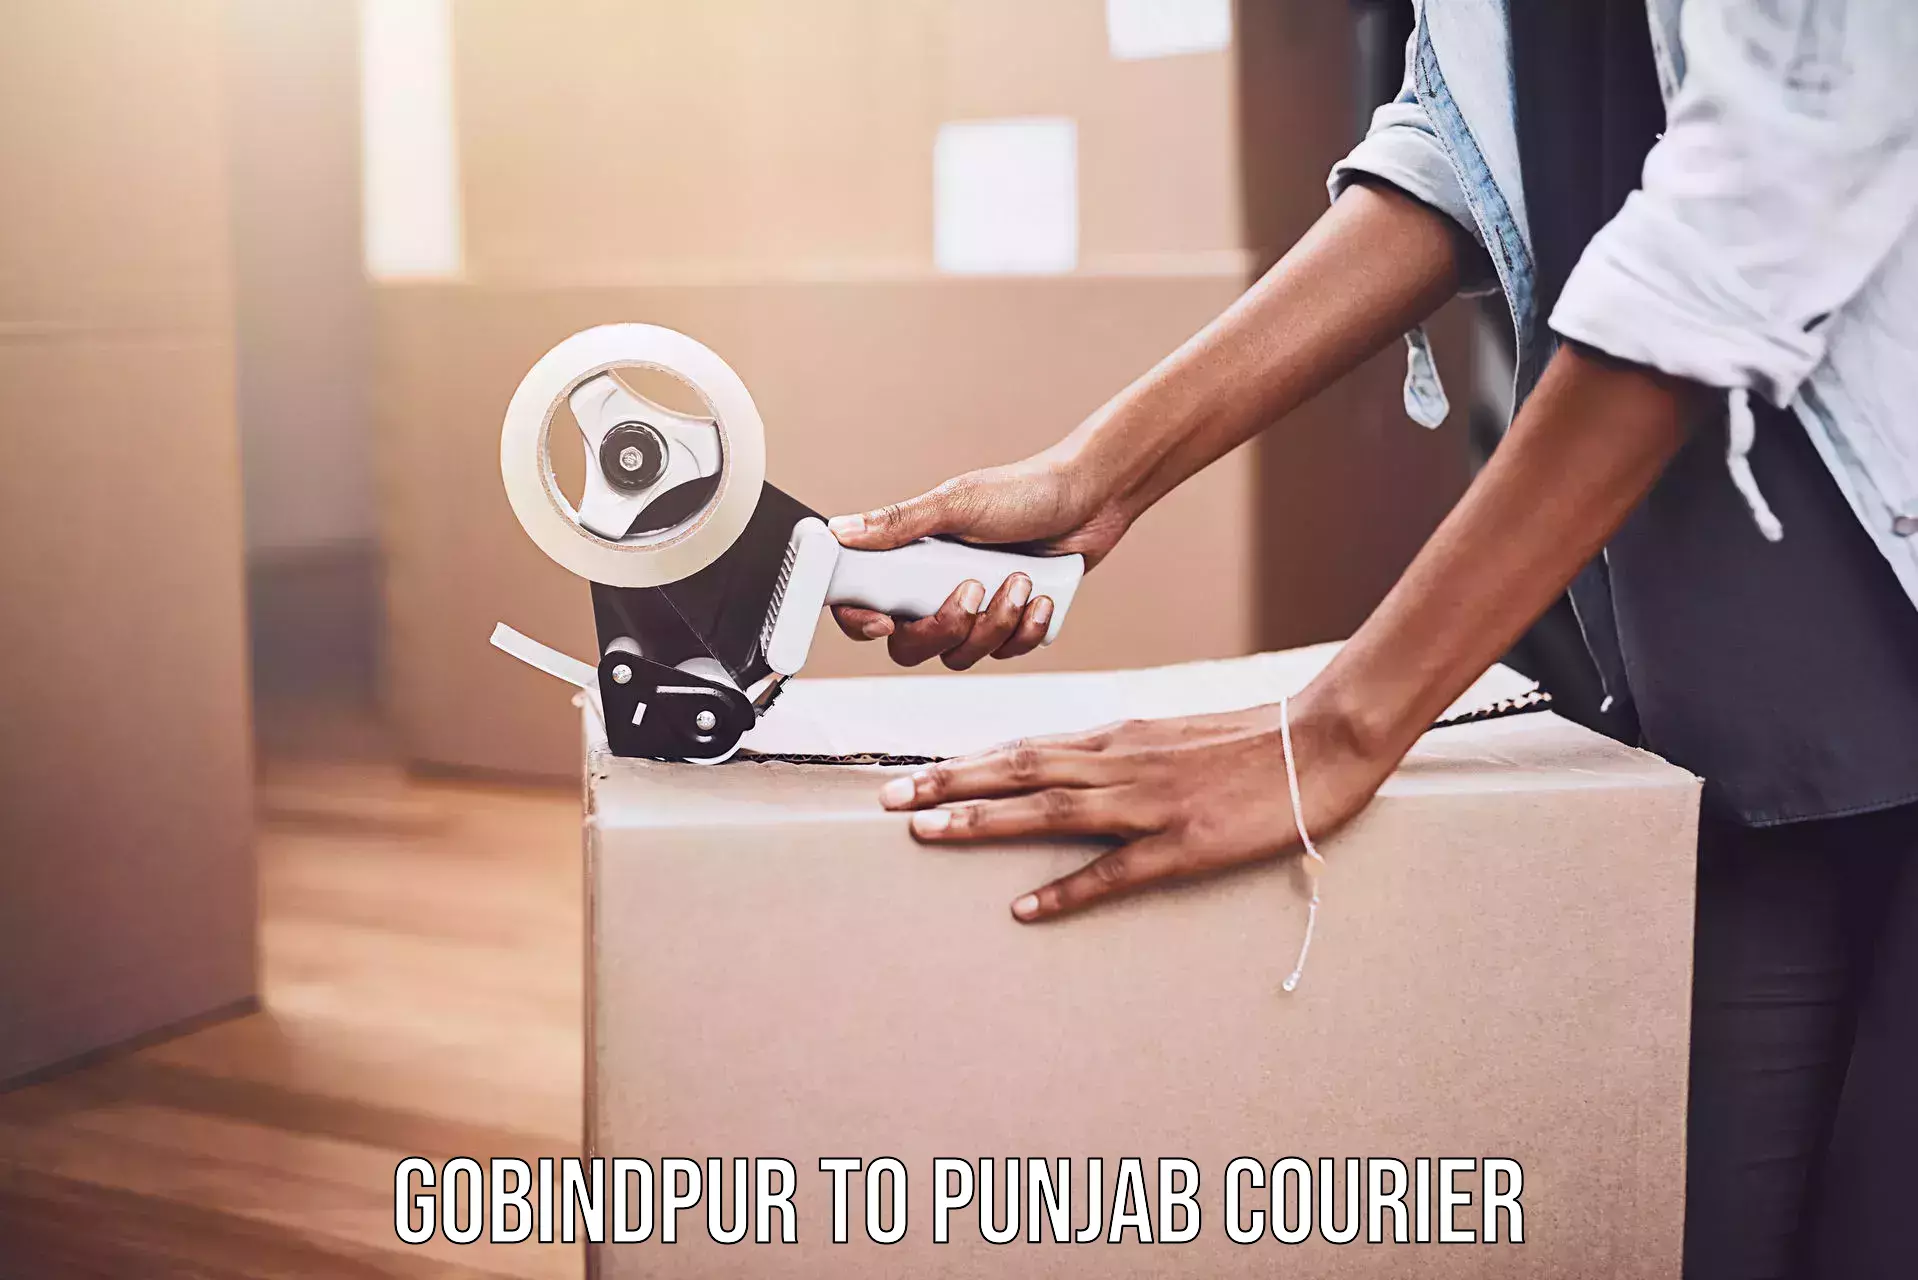 Fast delivery service Gobindpur to Fatehgarh Sahib